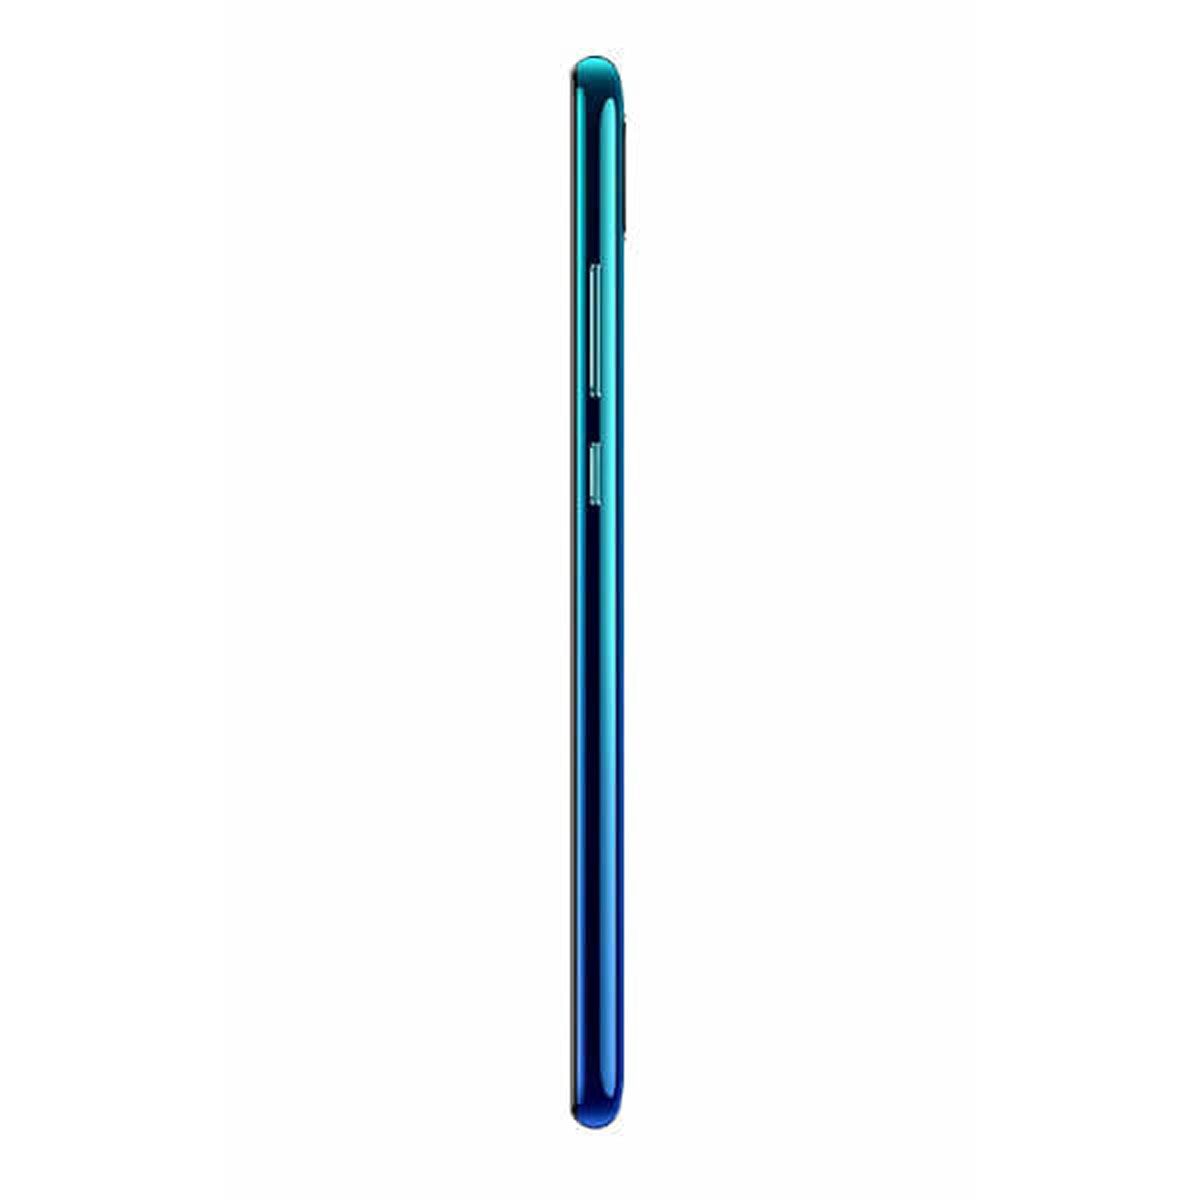 Huawei P Smart (2019) 3GB/64GB Azul (Aurora Blue) Single SIM